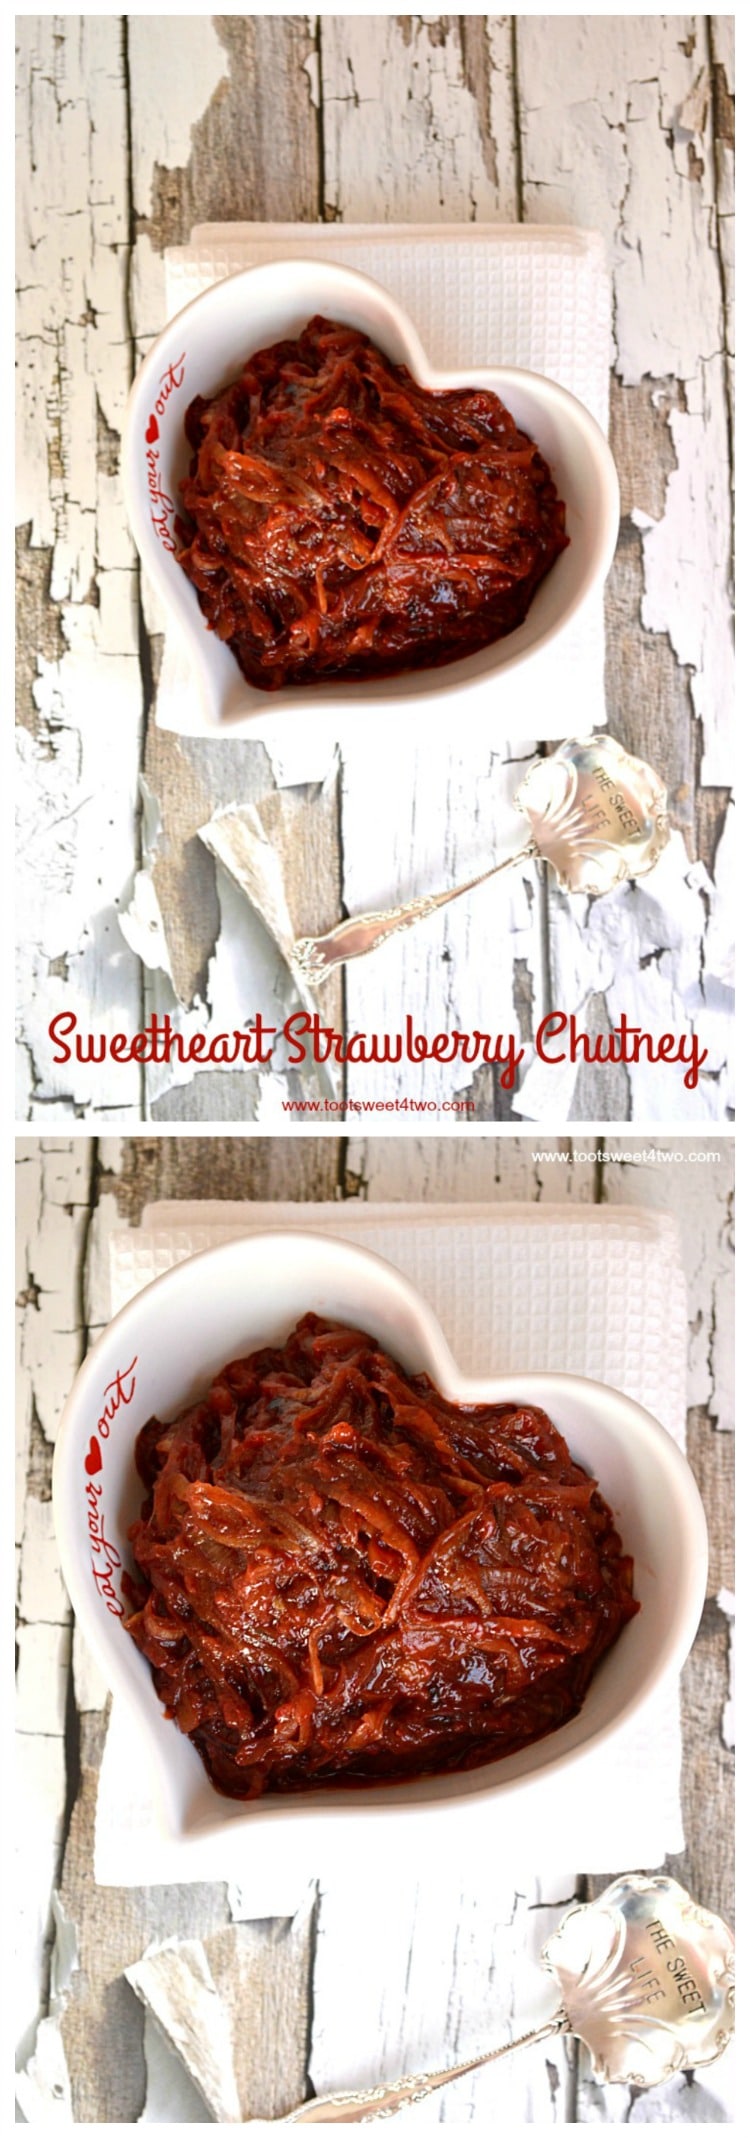 Sweetheart Strawberry Chutney collage